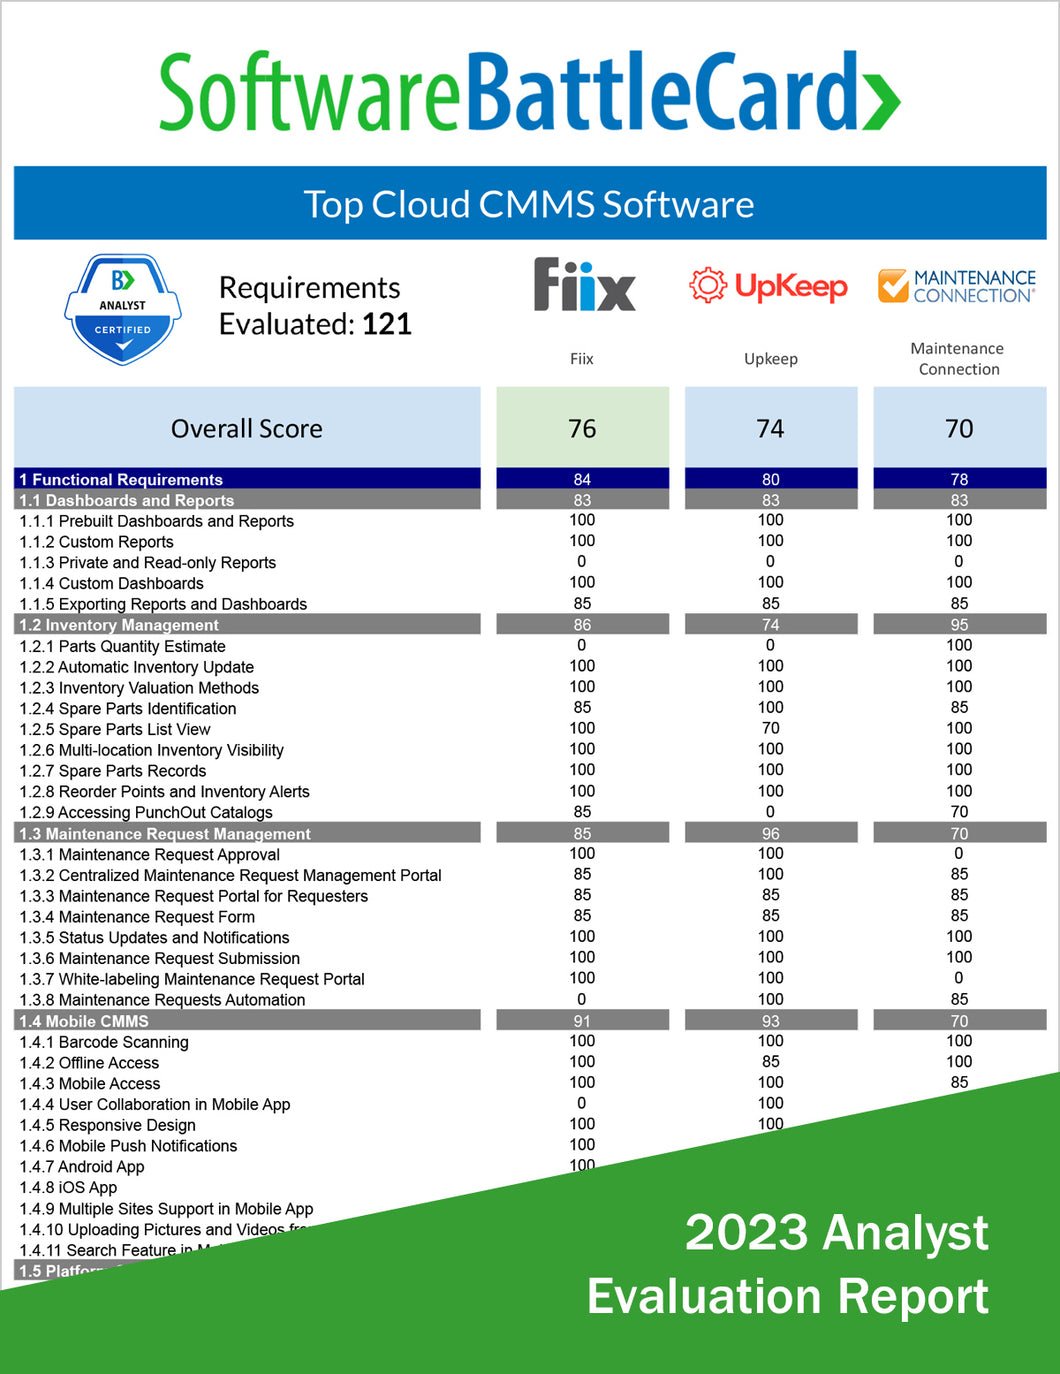 Best Cloud CMMS Software: Fiix vs. UpKeep vs. Maintenance Connection